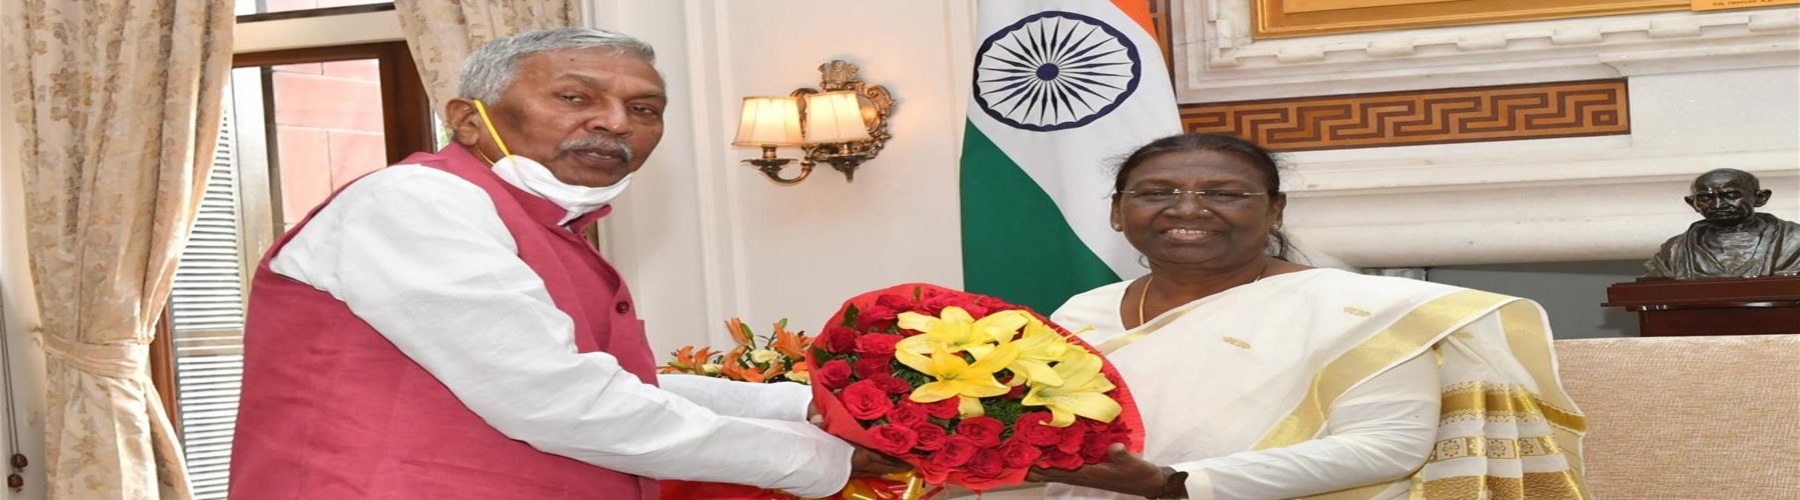 His Excellency, Shri Phagu Chauhan met the President of India, Smt. Droupadi Murmu at Rashtrapati Bhavan on July 26, 2022.